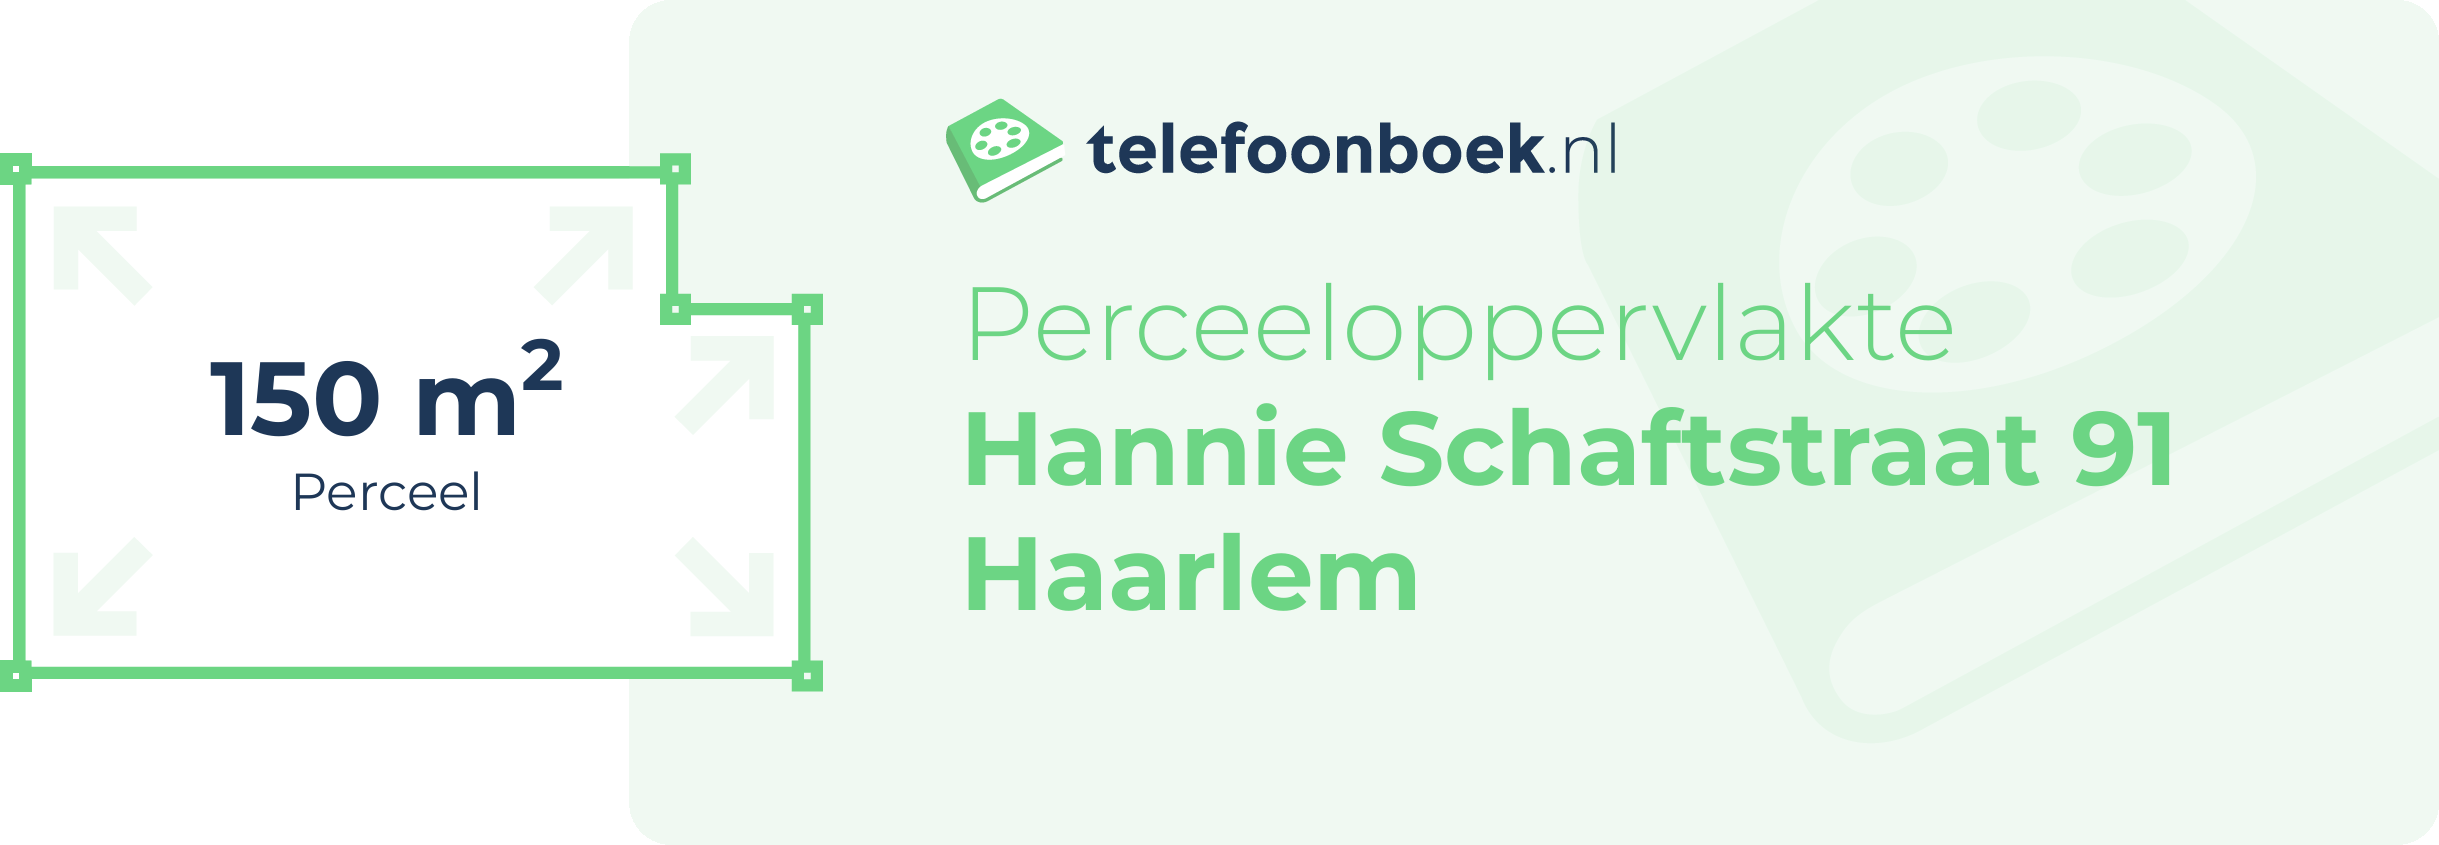 Perceeloppervlakte Hannie Schaftstraat 91 Haarlem